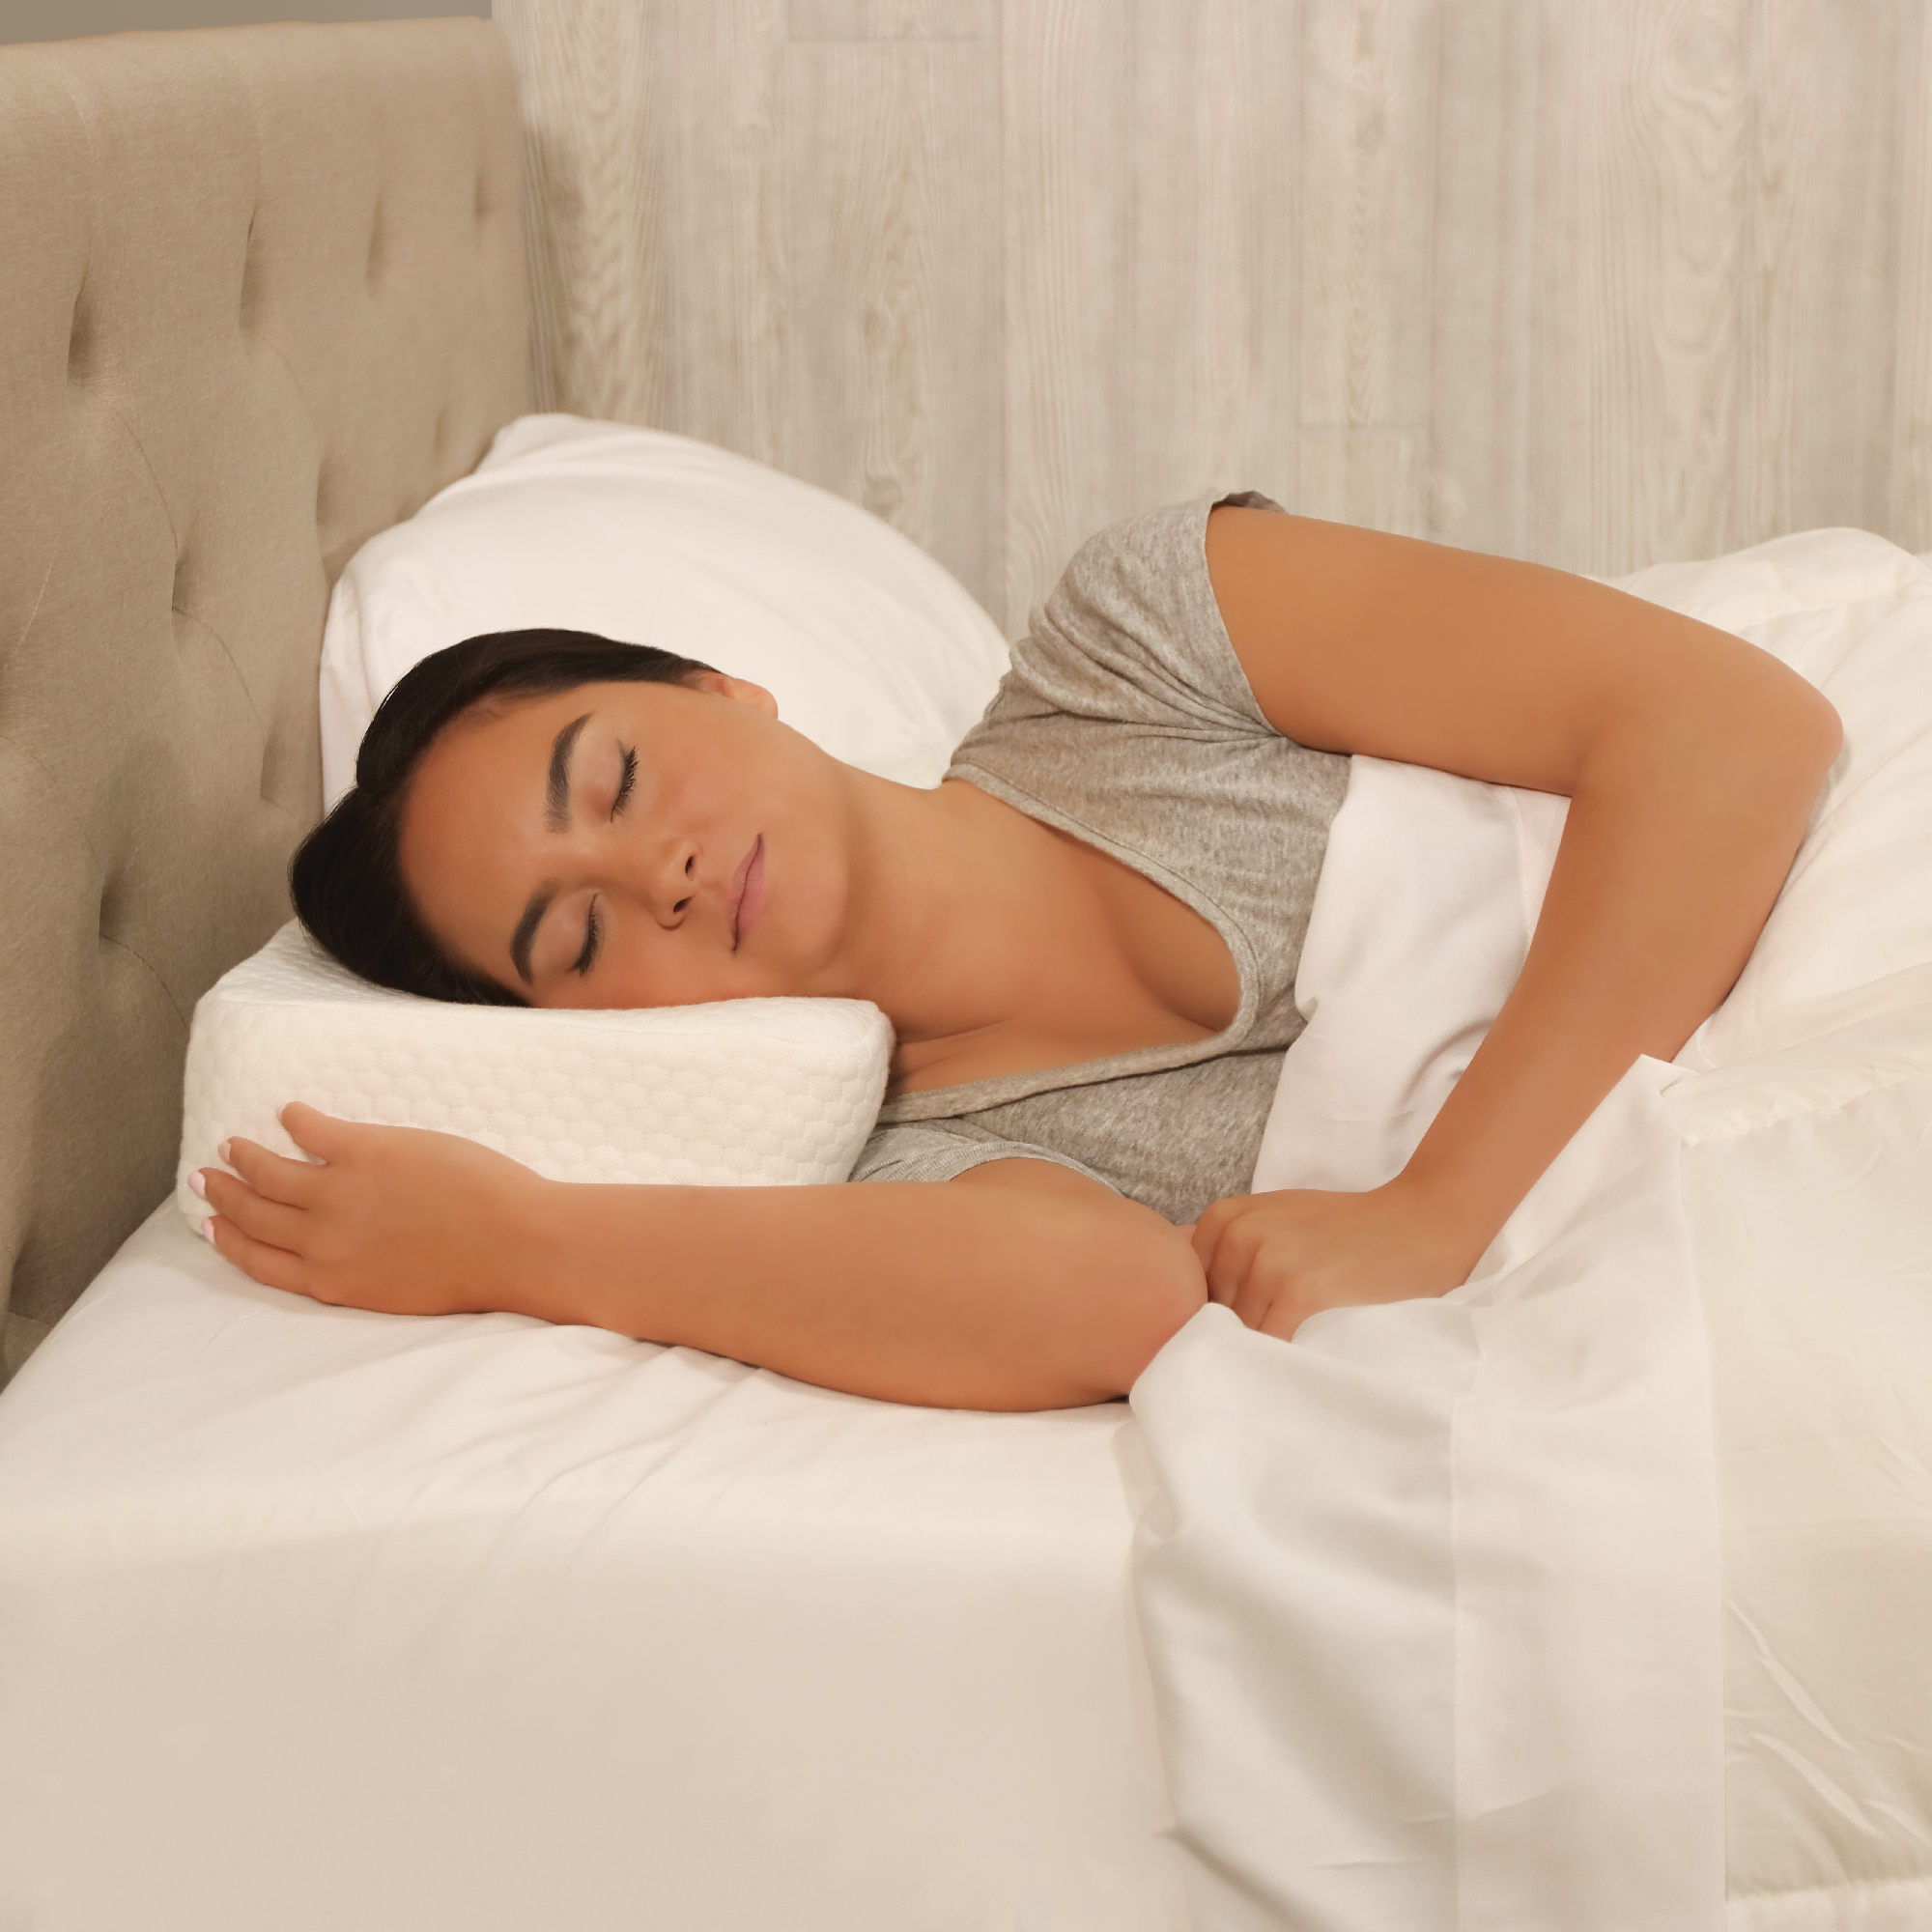 Therapeutica Orthopedic Sleeping Pillow